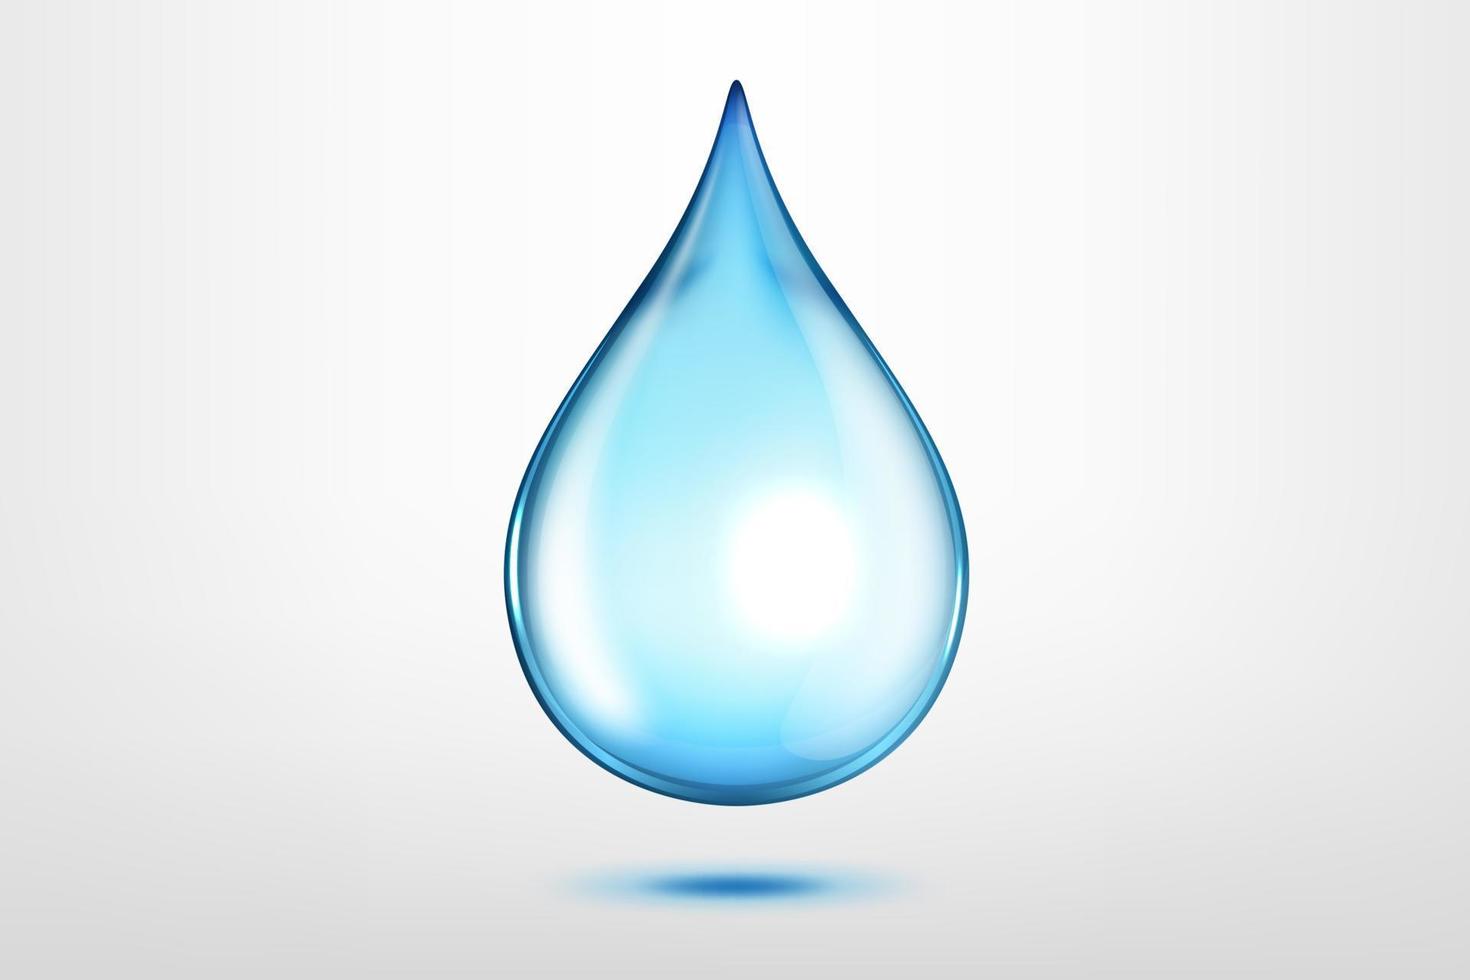 gota de agua de alta calidad aislada en fondo blanco, diferente de un vector similar. ilustración vectorial